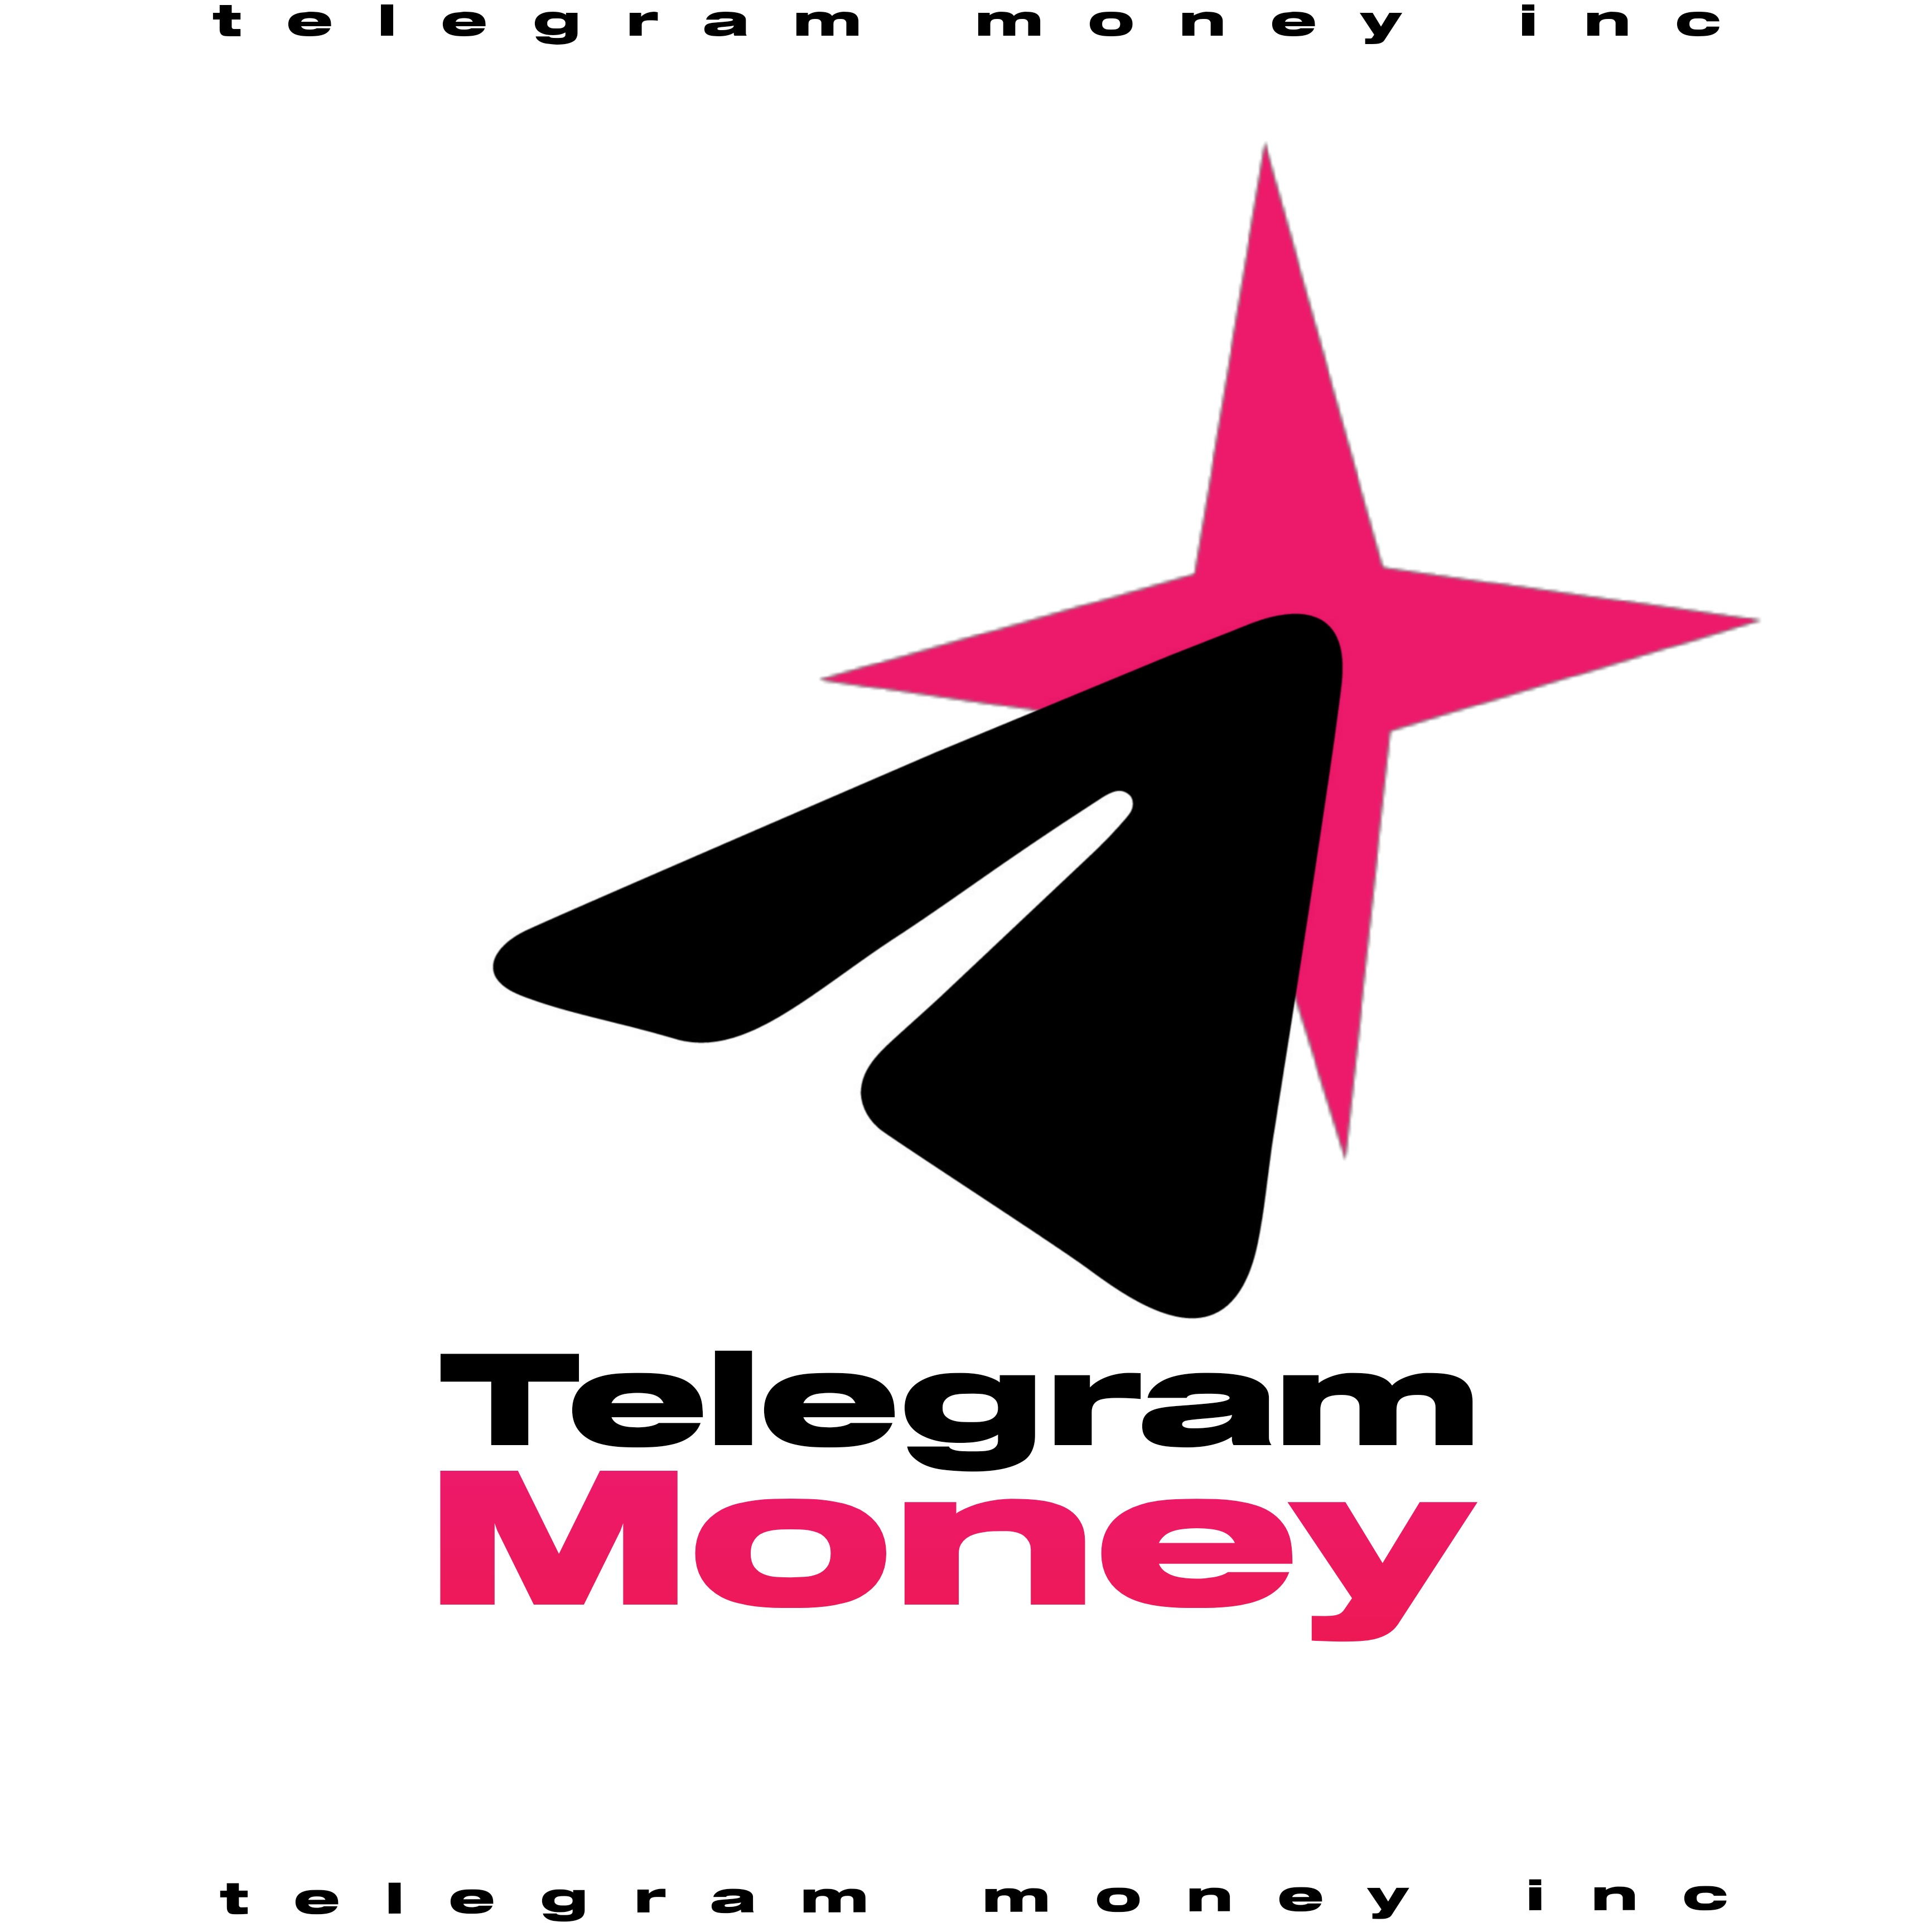 Business telegram channel